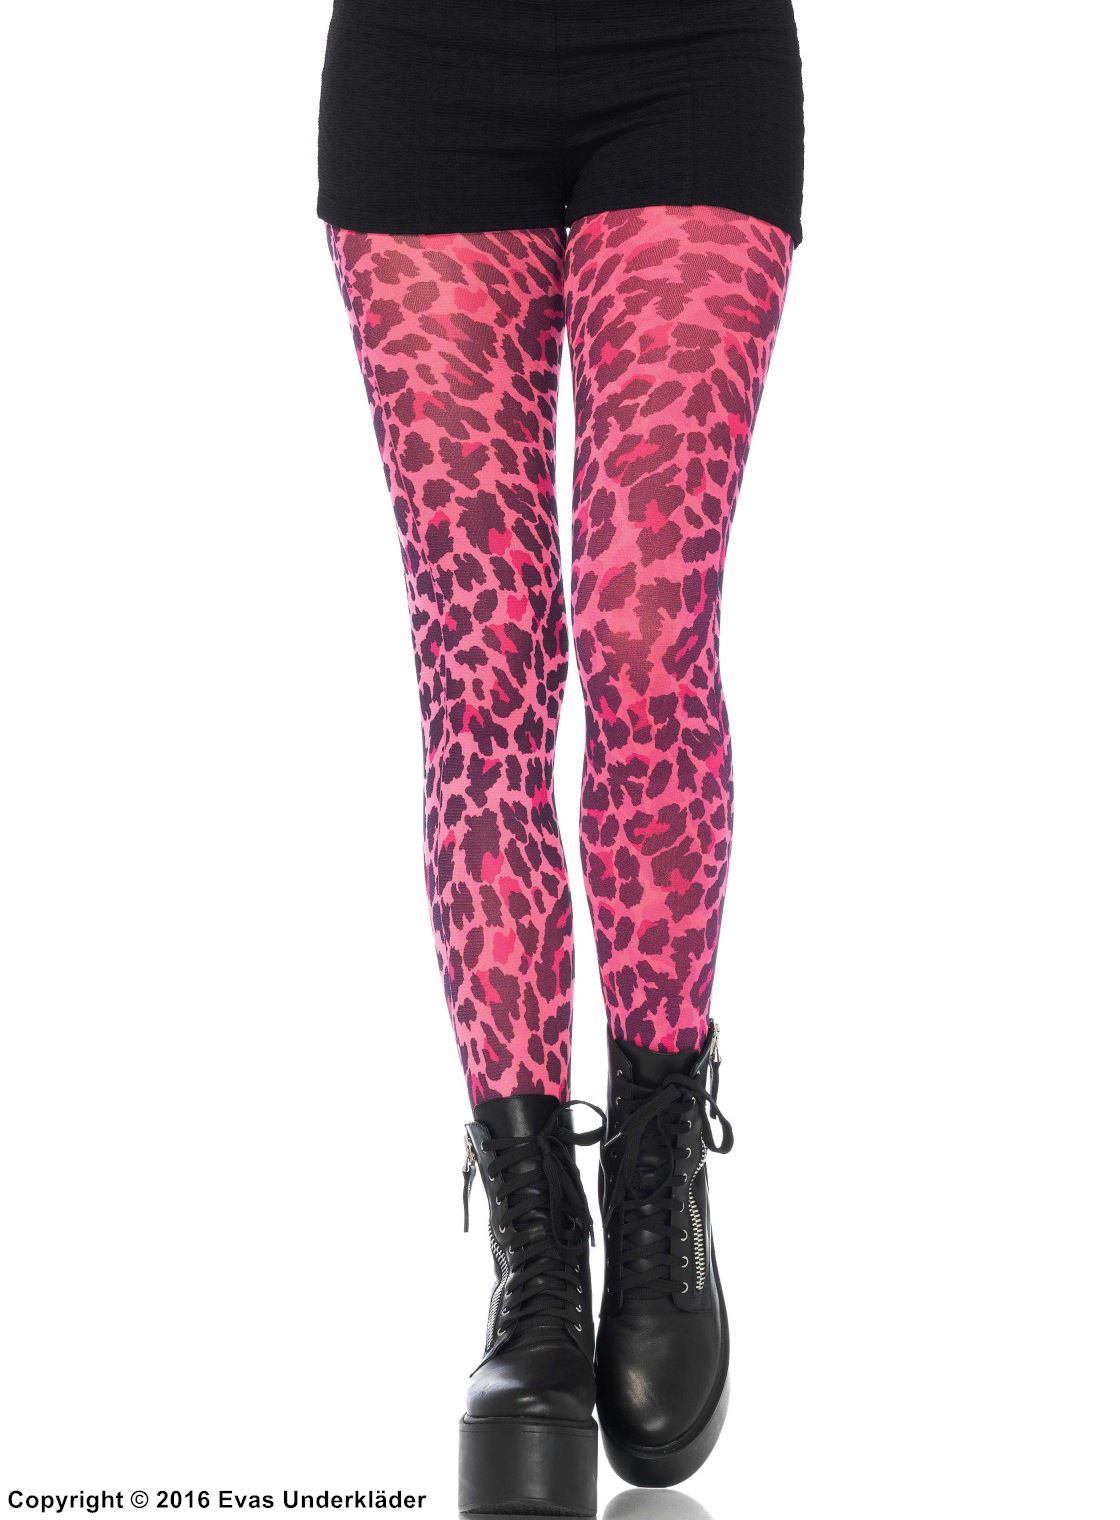 Pantyhose, colorful leopard (pattern)